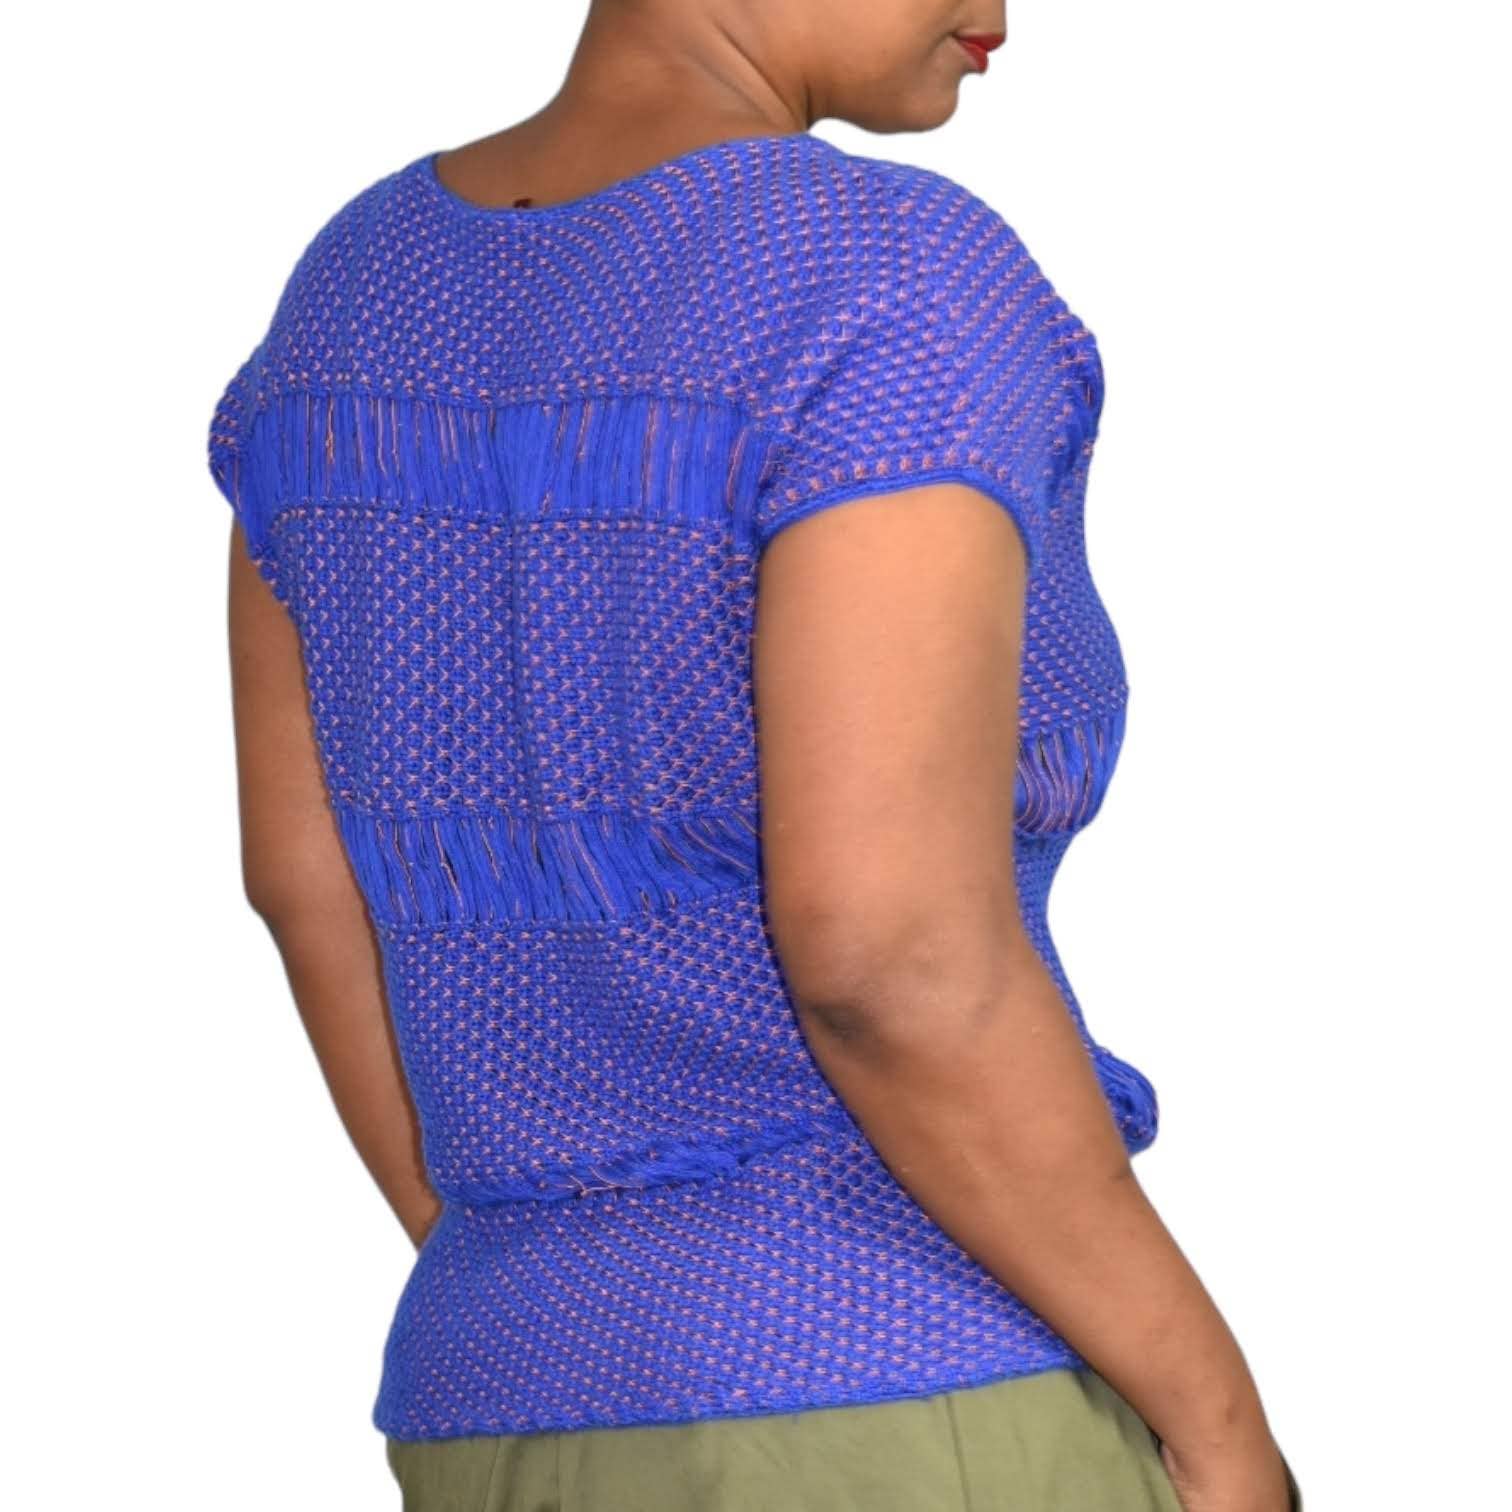 Comptoir Des Cotonniers Top Knit Crochet Sweater Blue Short Sleeve Woven Jumper Size Small